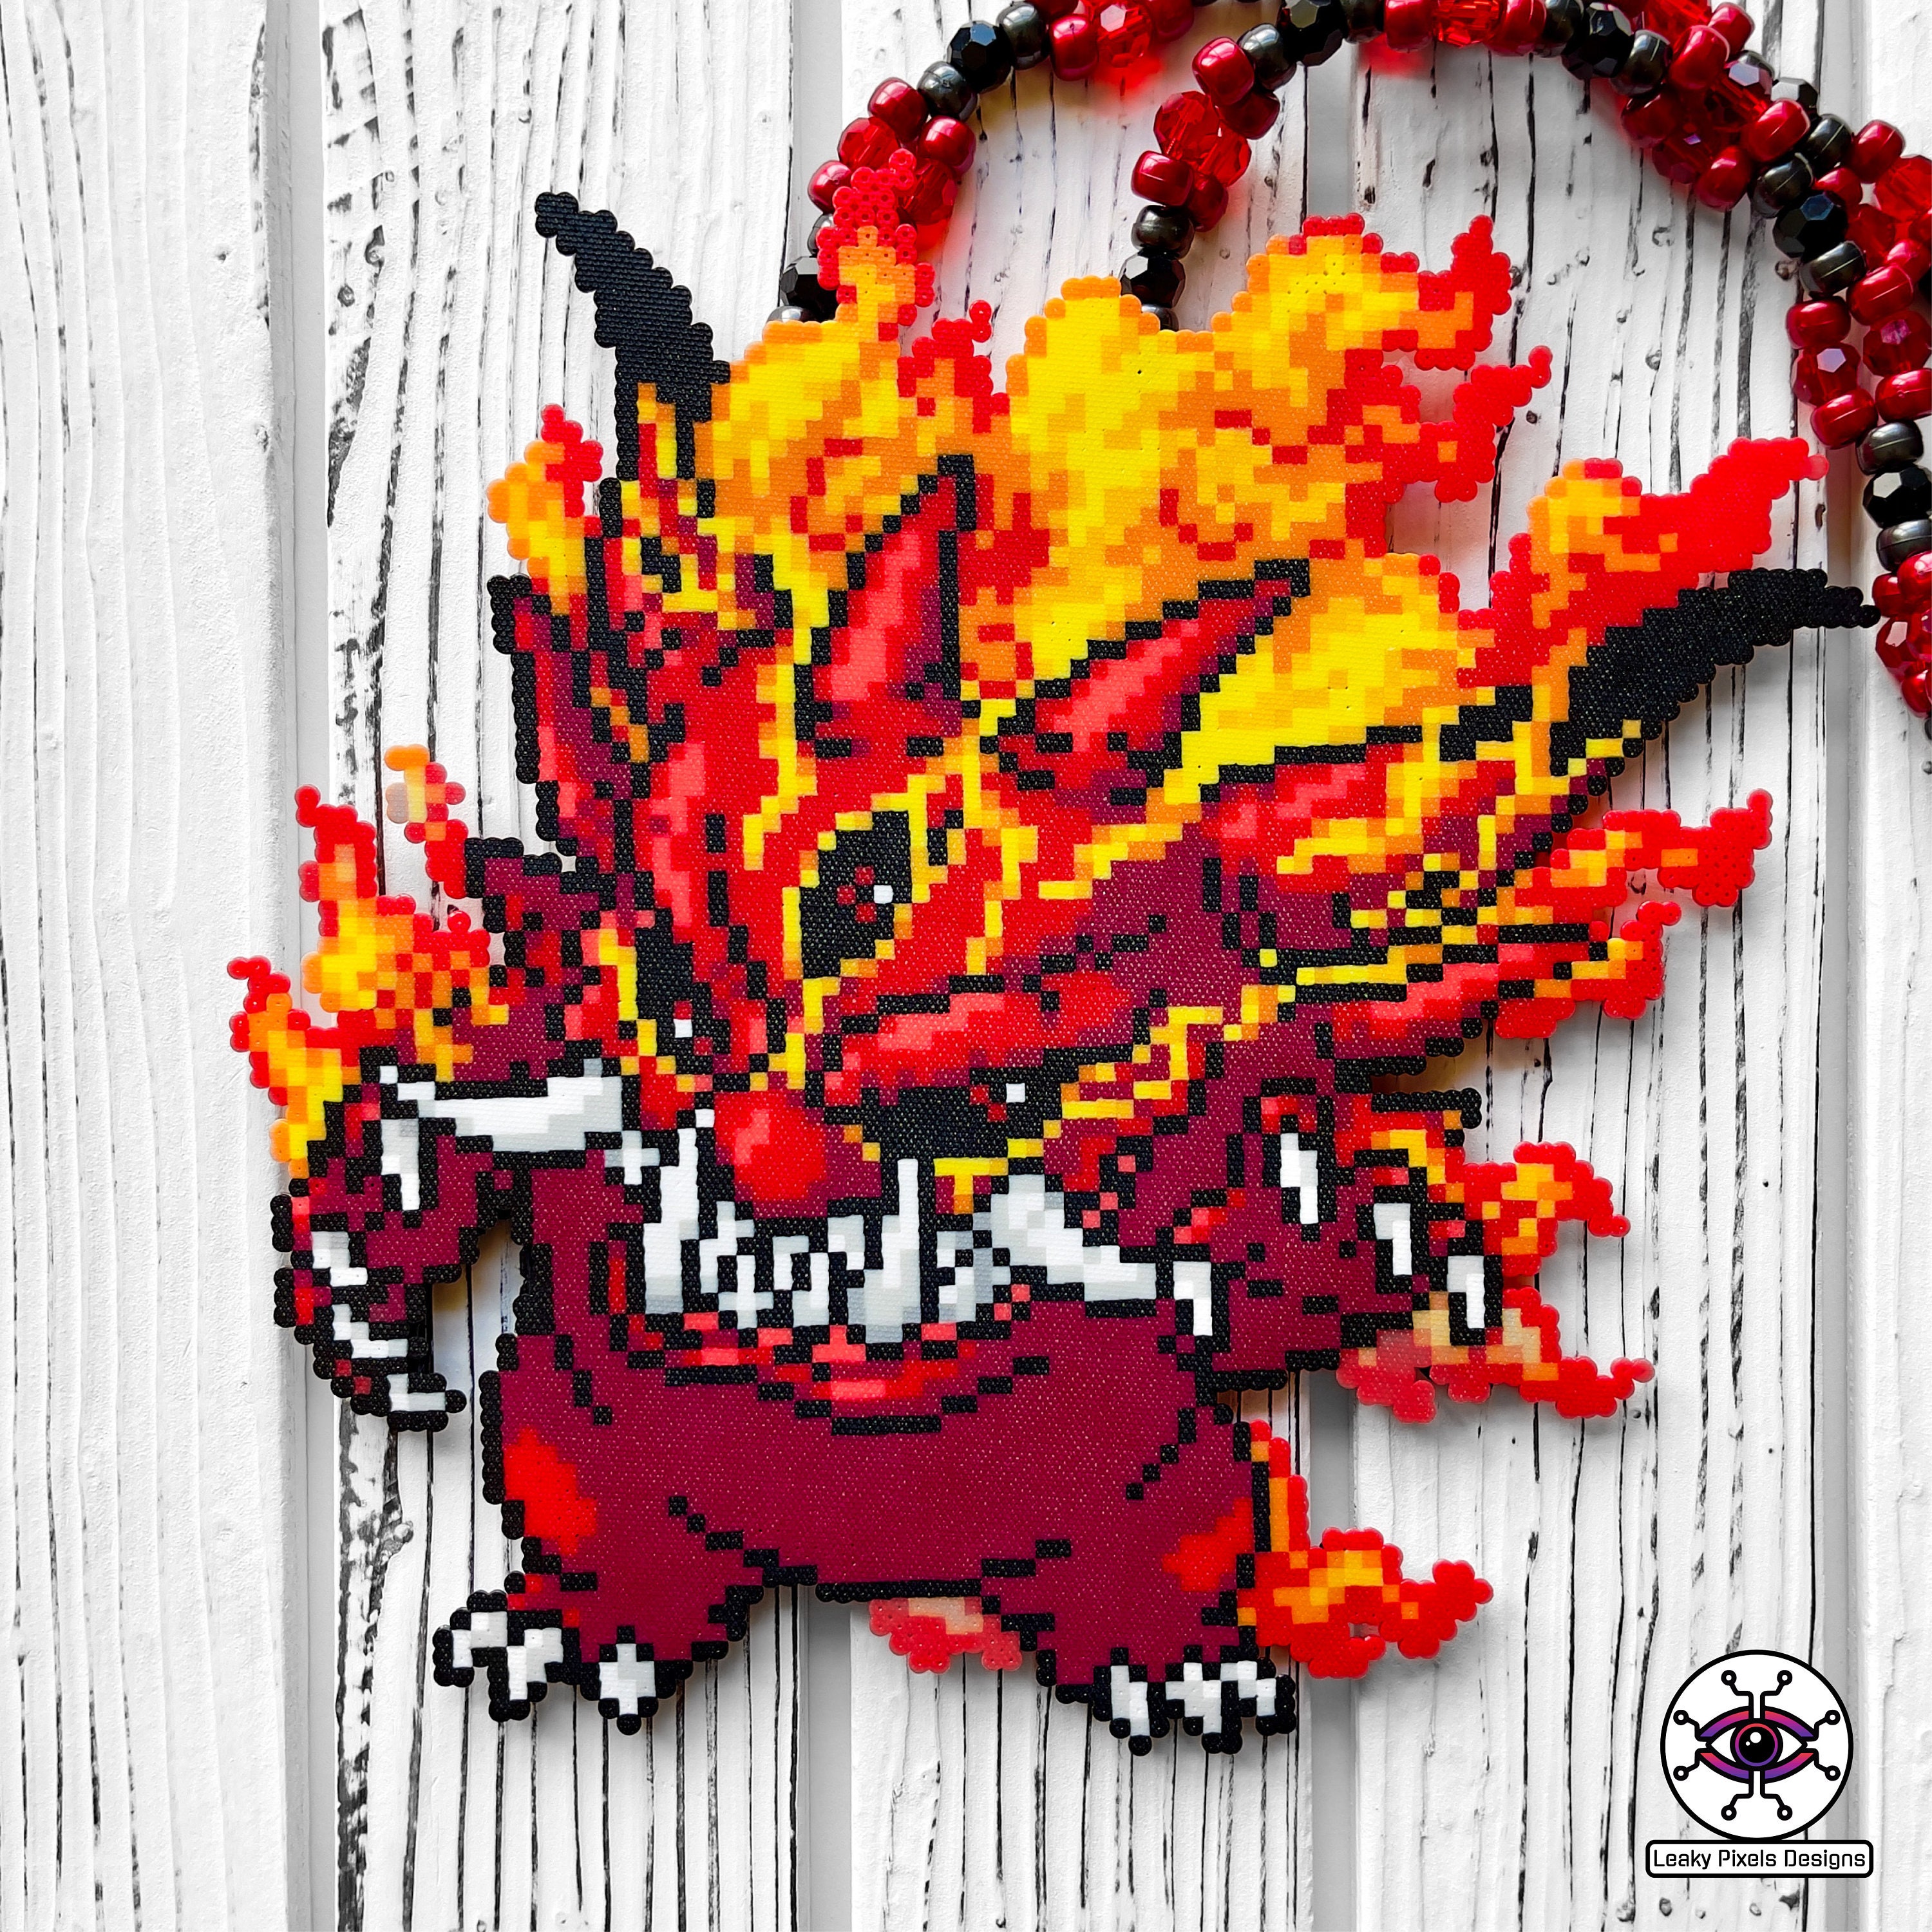 Live Shiny Gastly, Haunter & Gengar Halloween 🎃 Pokémon Fire Red